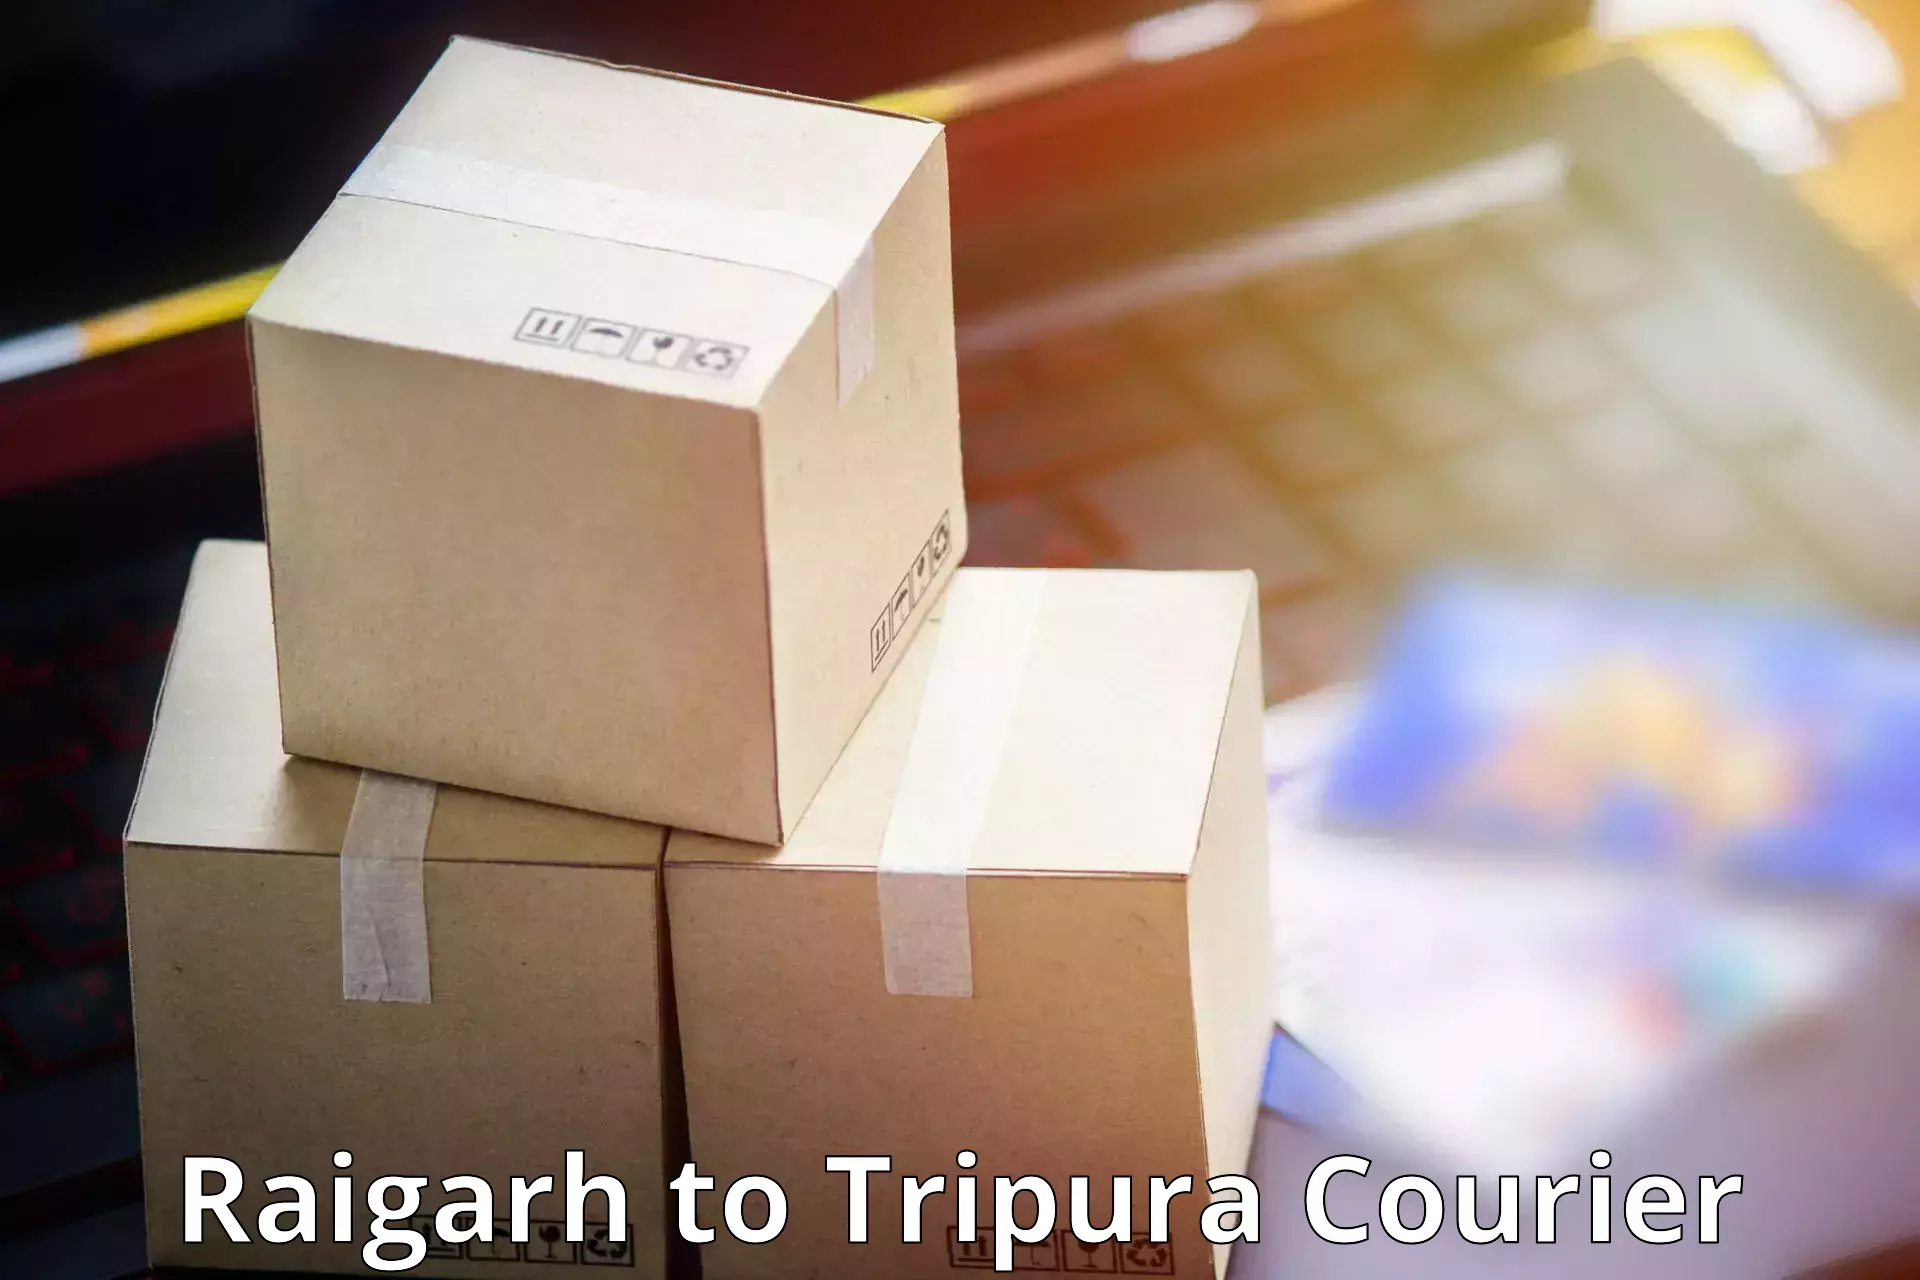 Courier service innovation Raigarh to Amarpur